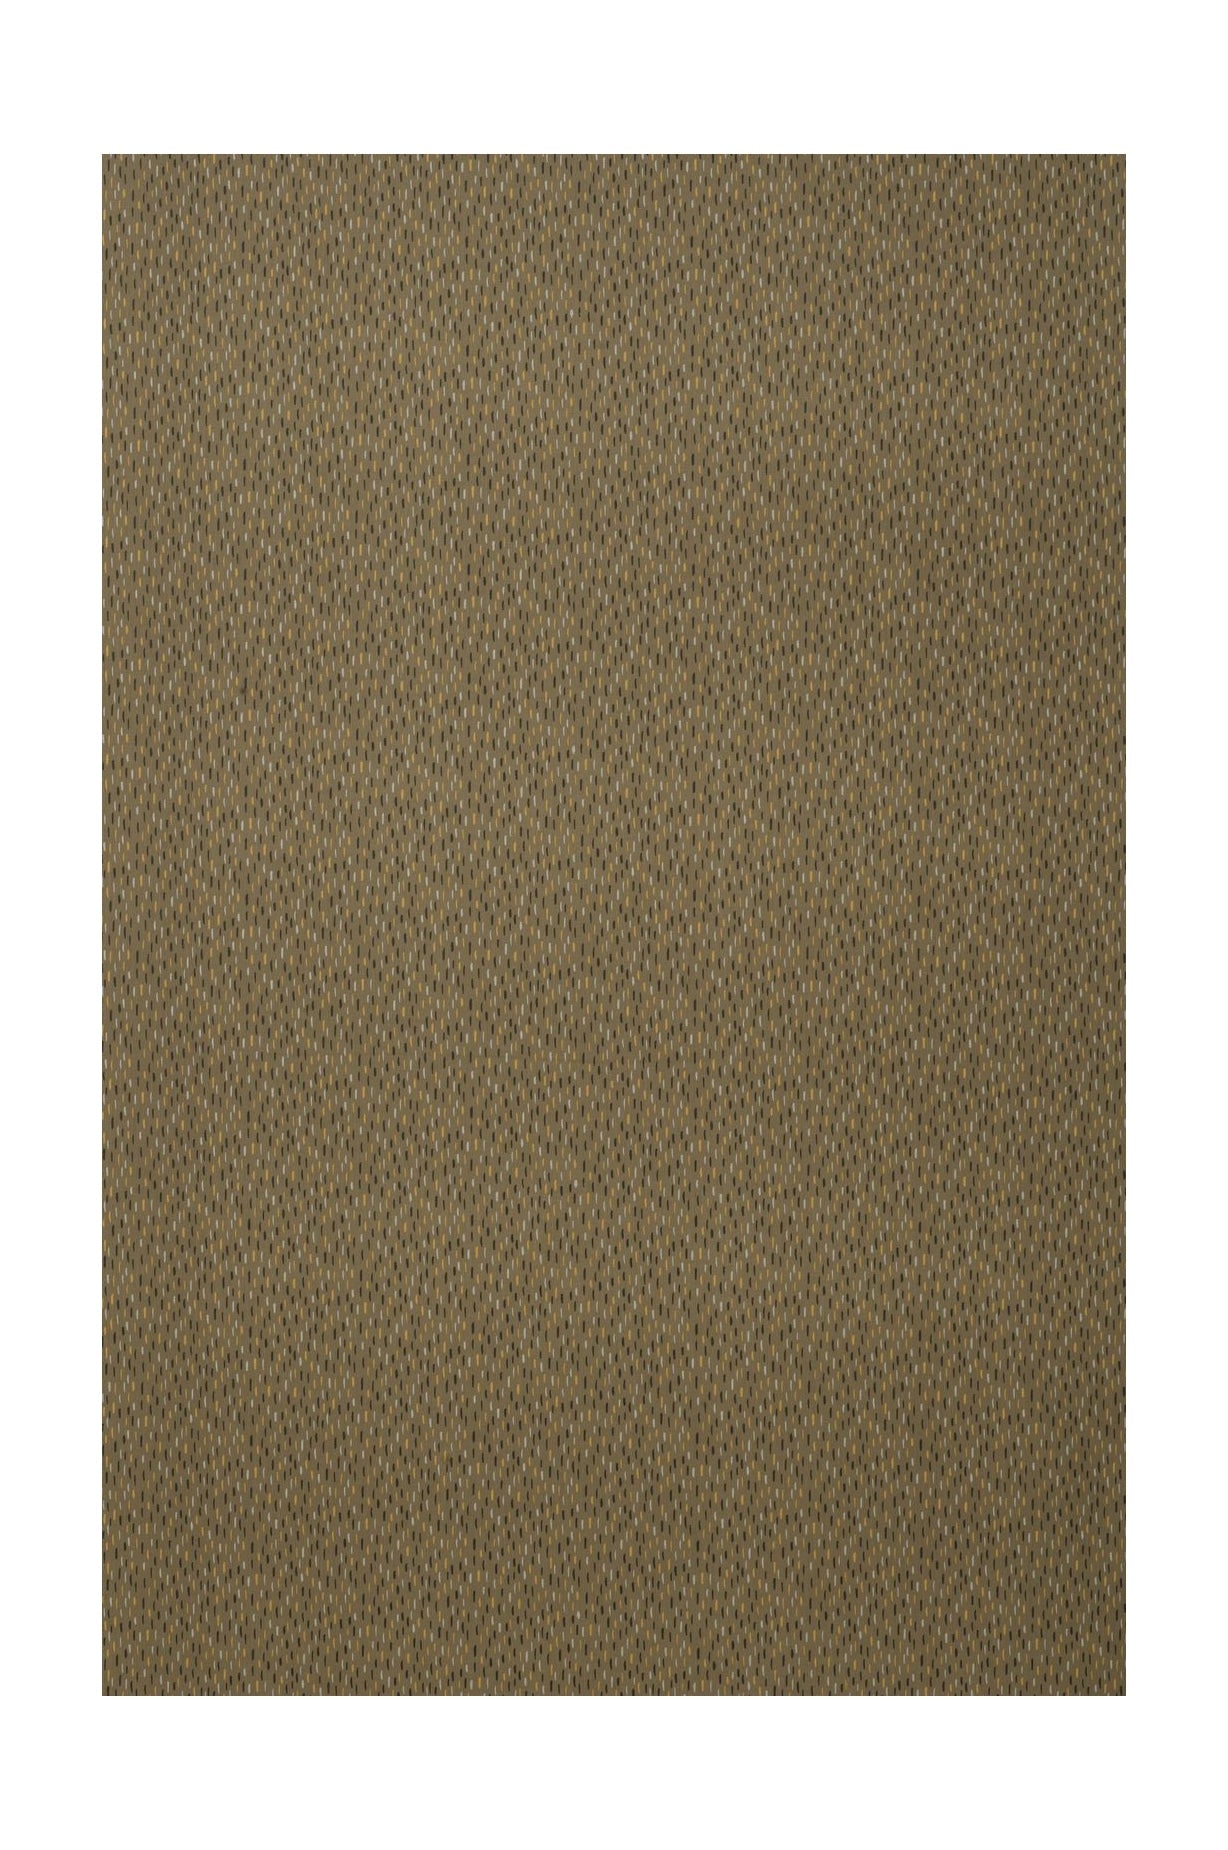 Spira Art Fabric Breite 150 Cm (Preis pro Meter), Braun